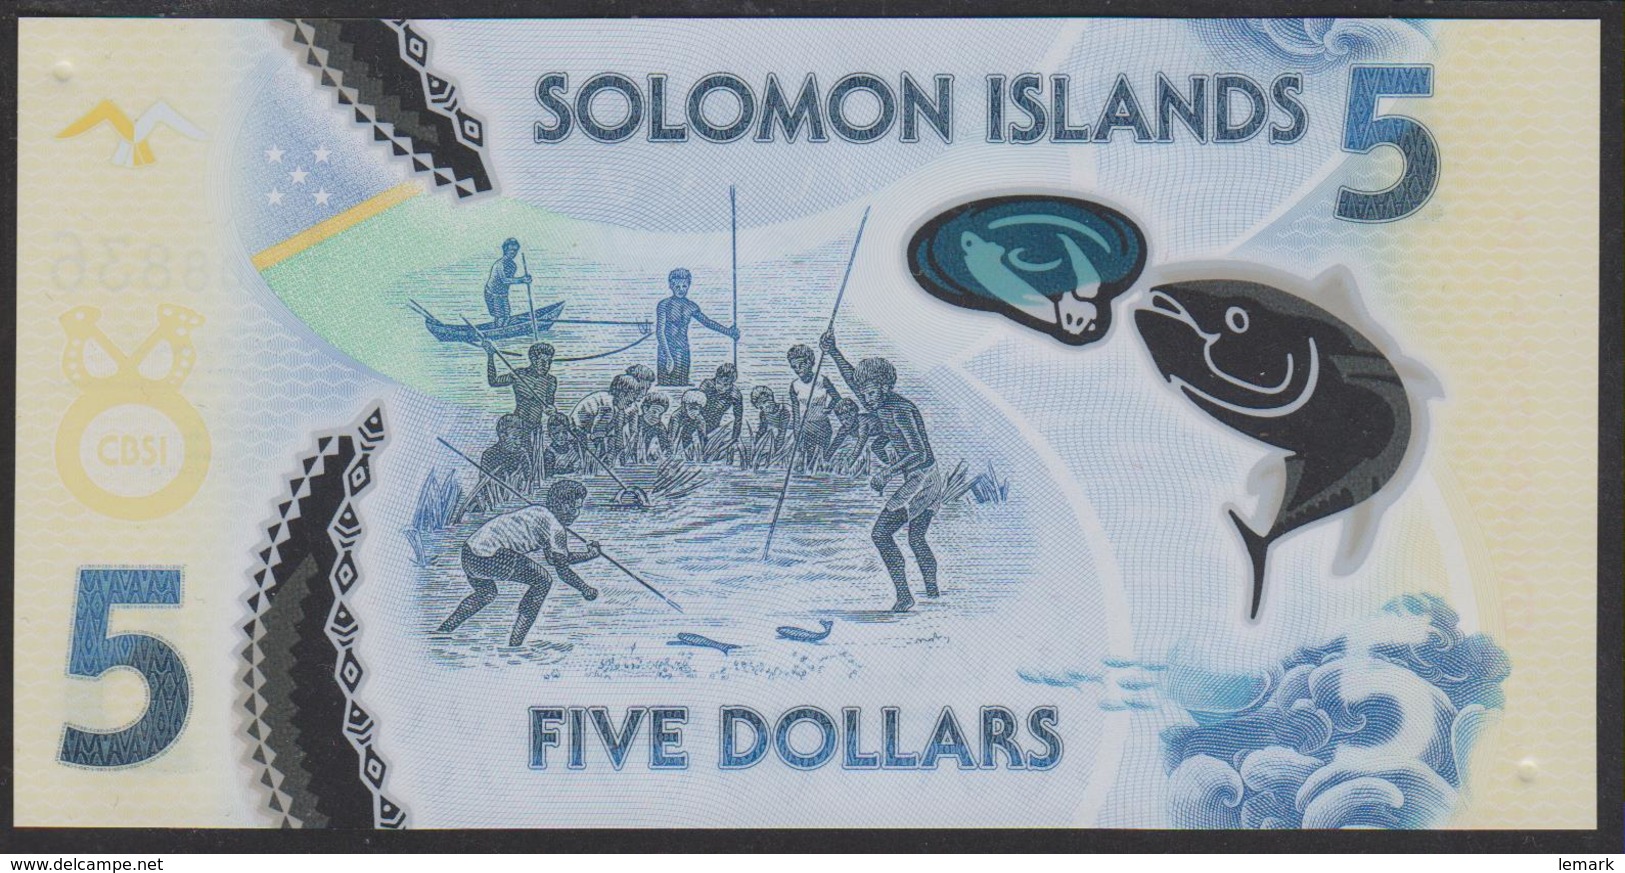 Solomon Islands 5 Dollar 2019 Pnew UNC - Solomon Islands